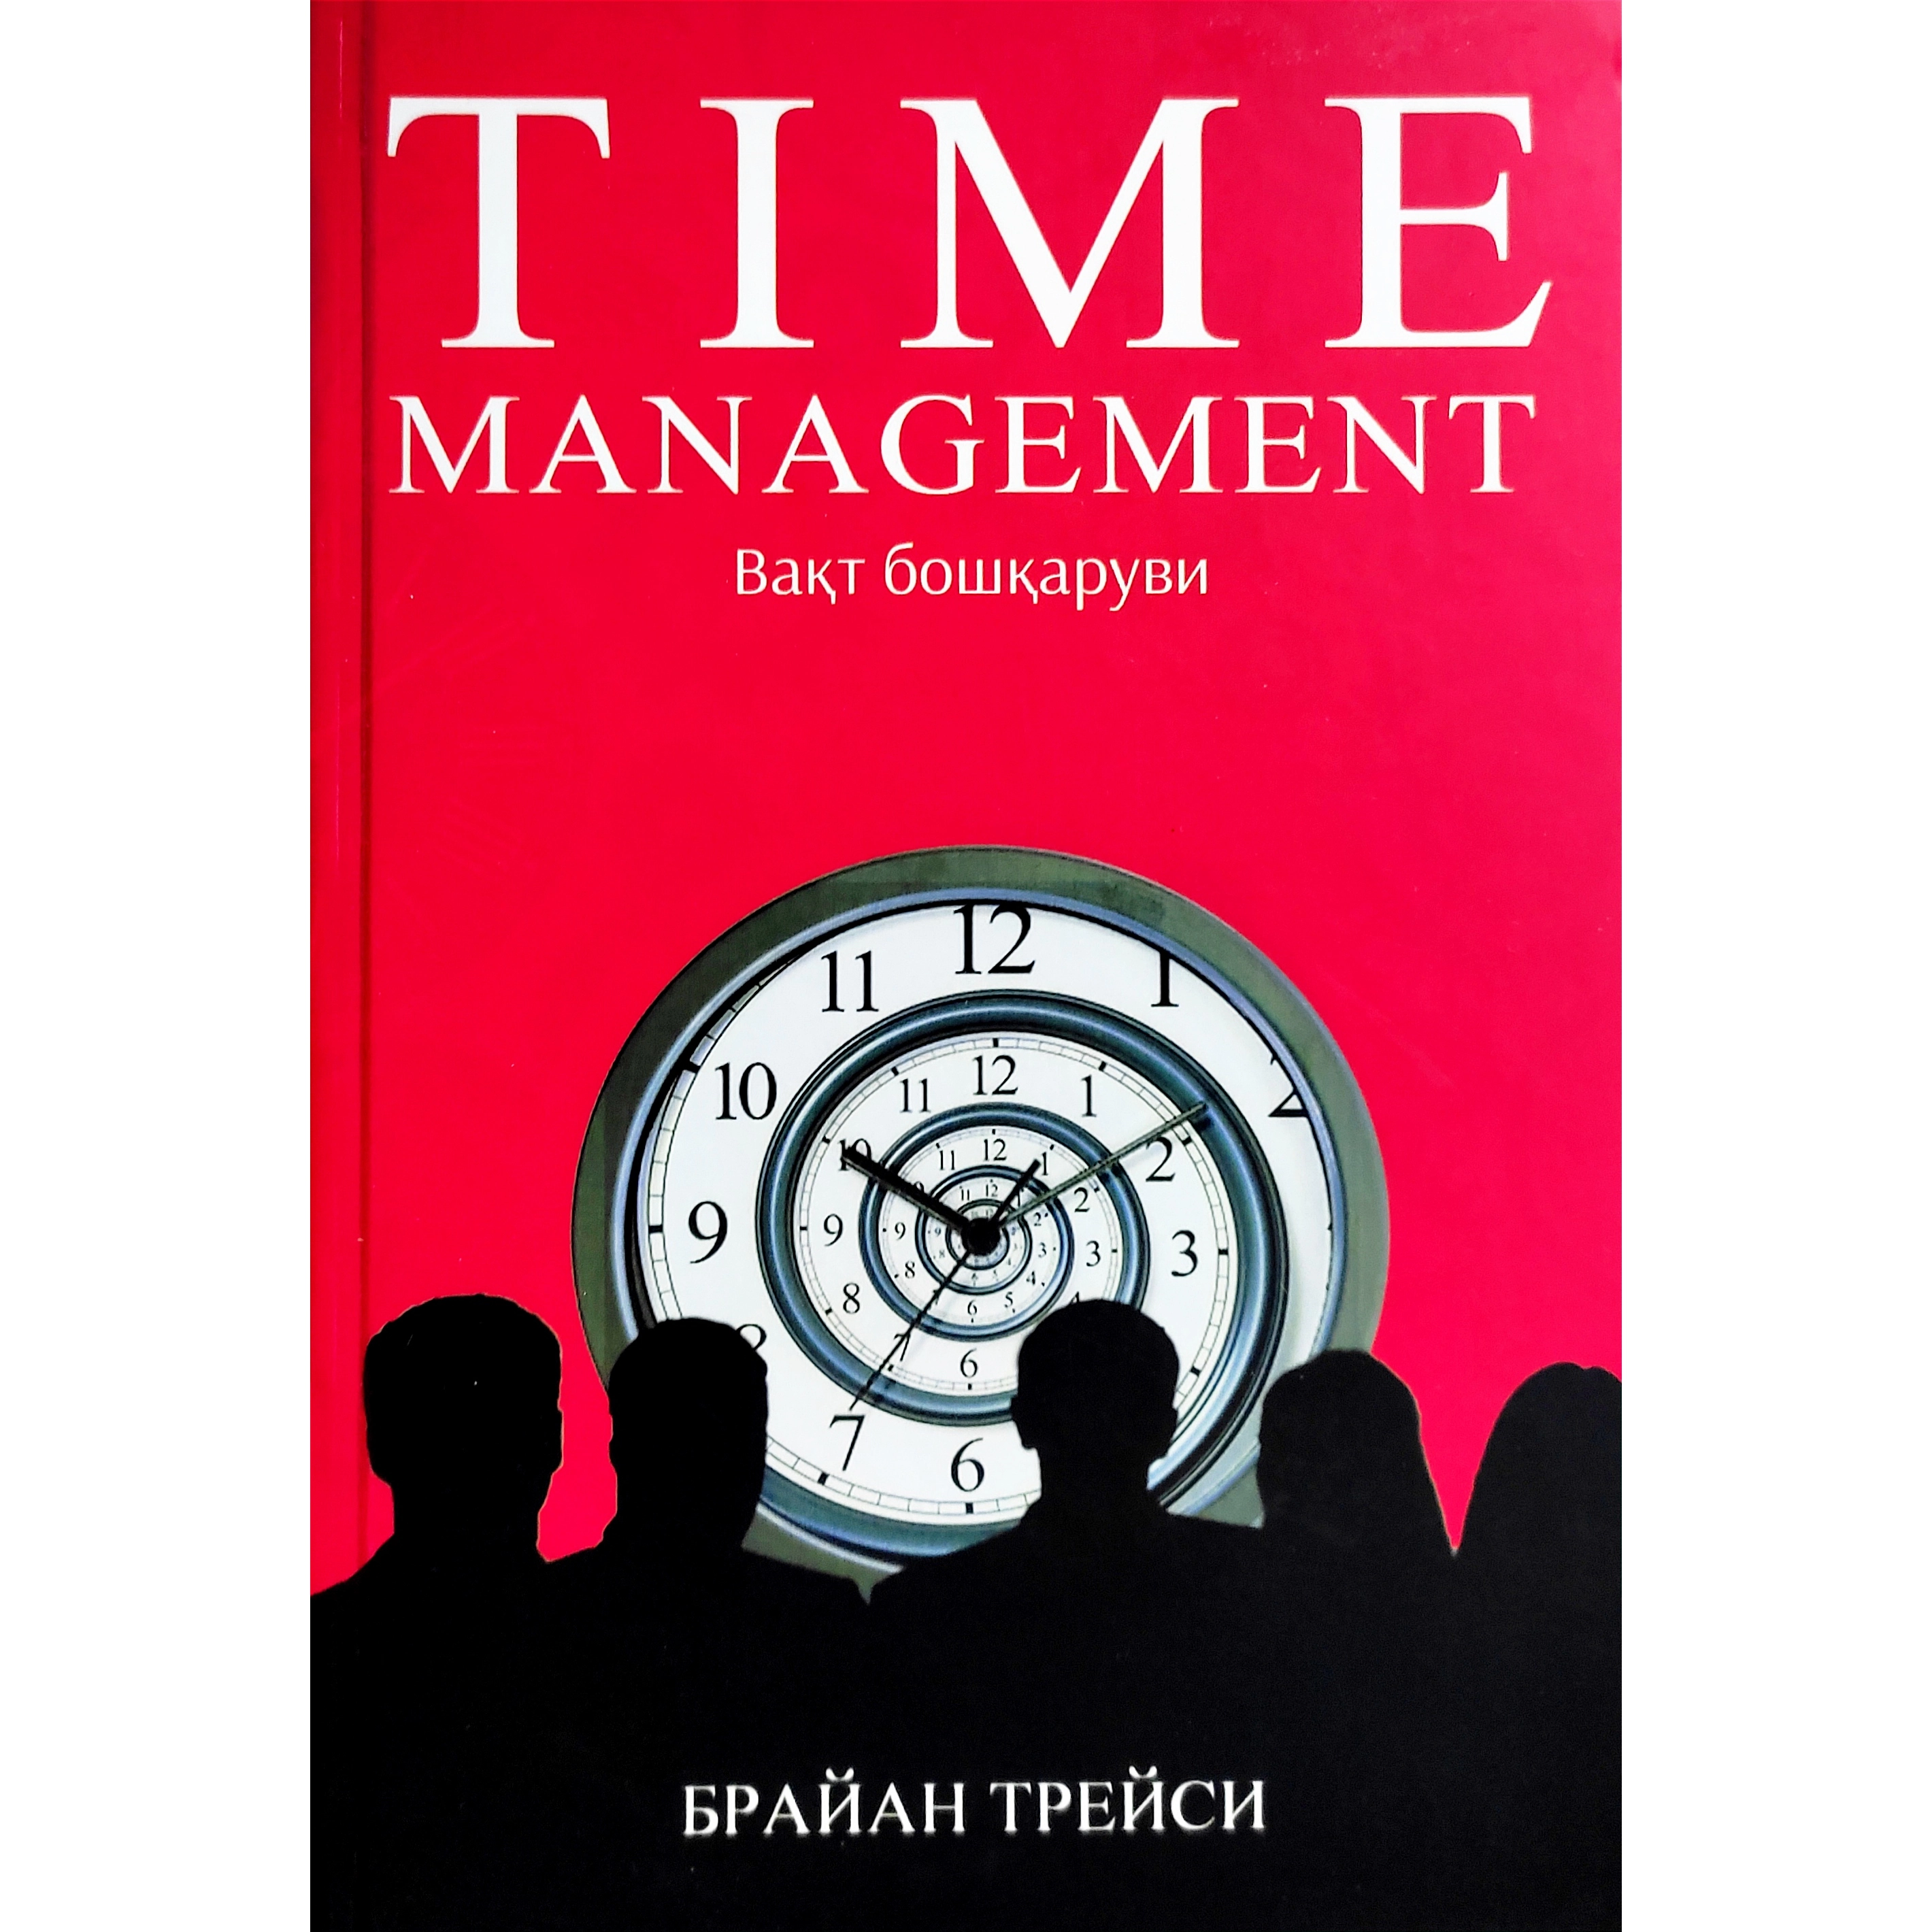 Брайан Трейси: Вақт бошқаруви (Time management) купить